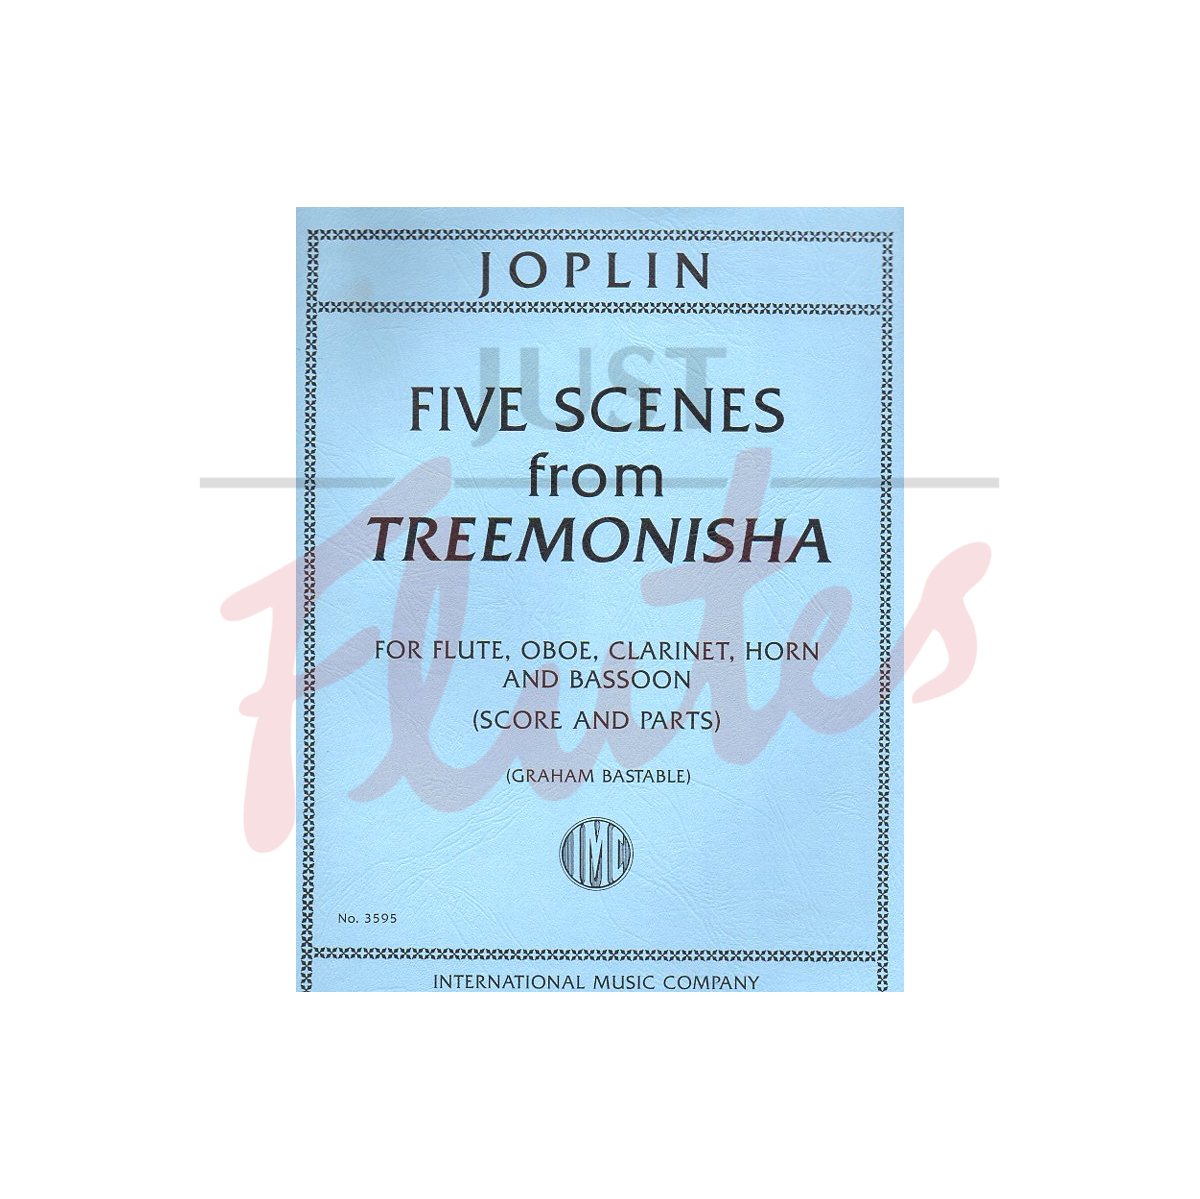 5 Scenes from Treemonisha arranged for Wind Quintet